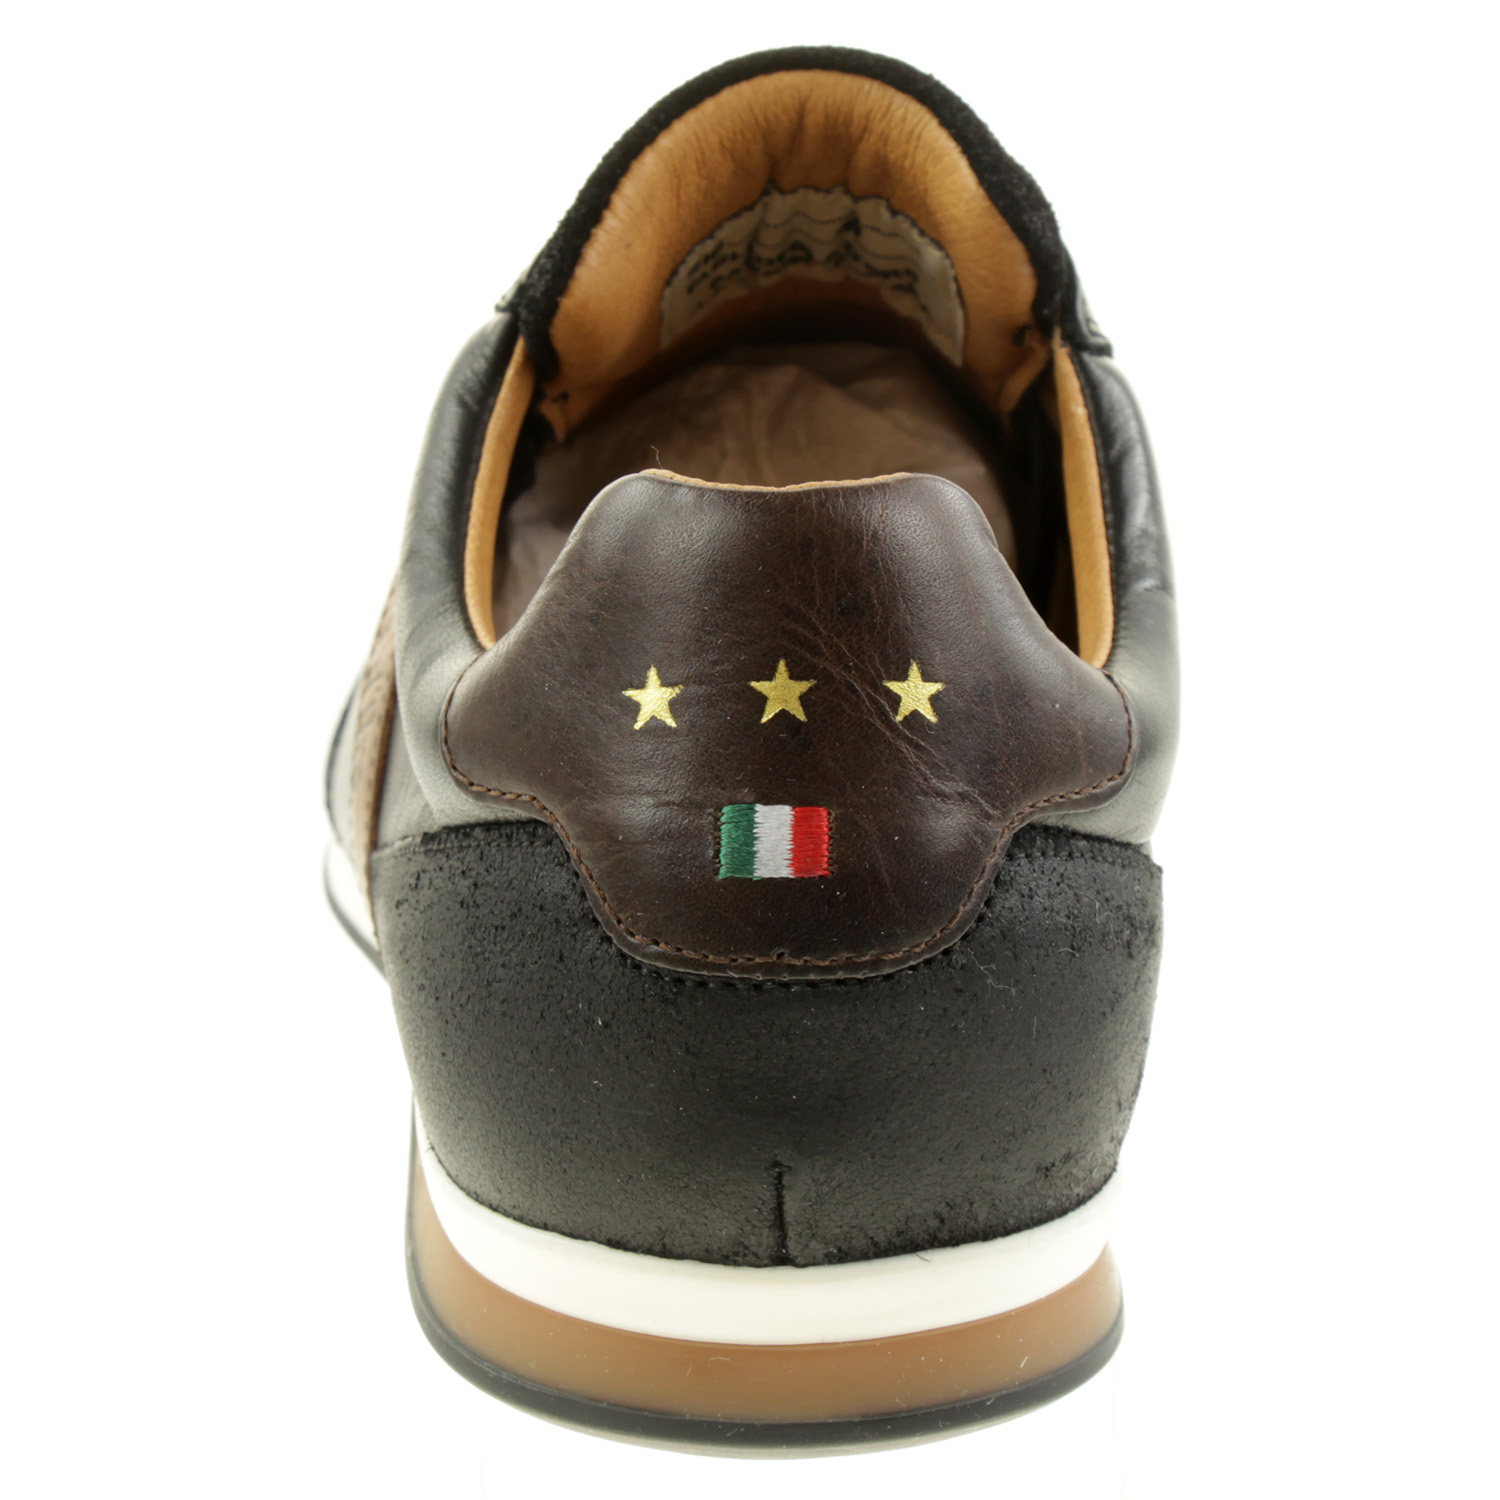 Pantofola d' Oro ROMA UOMO LOW Herren Sneaker schwarz Leder